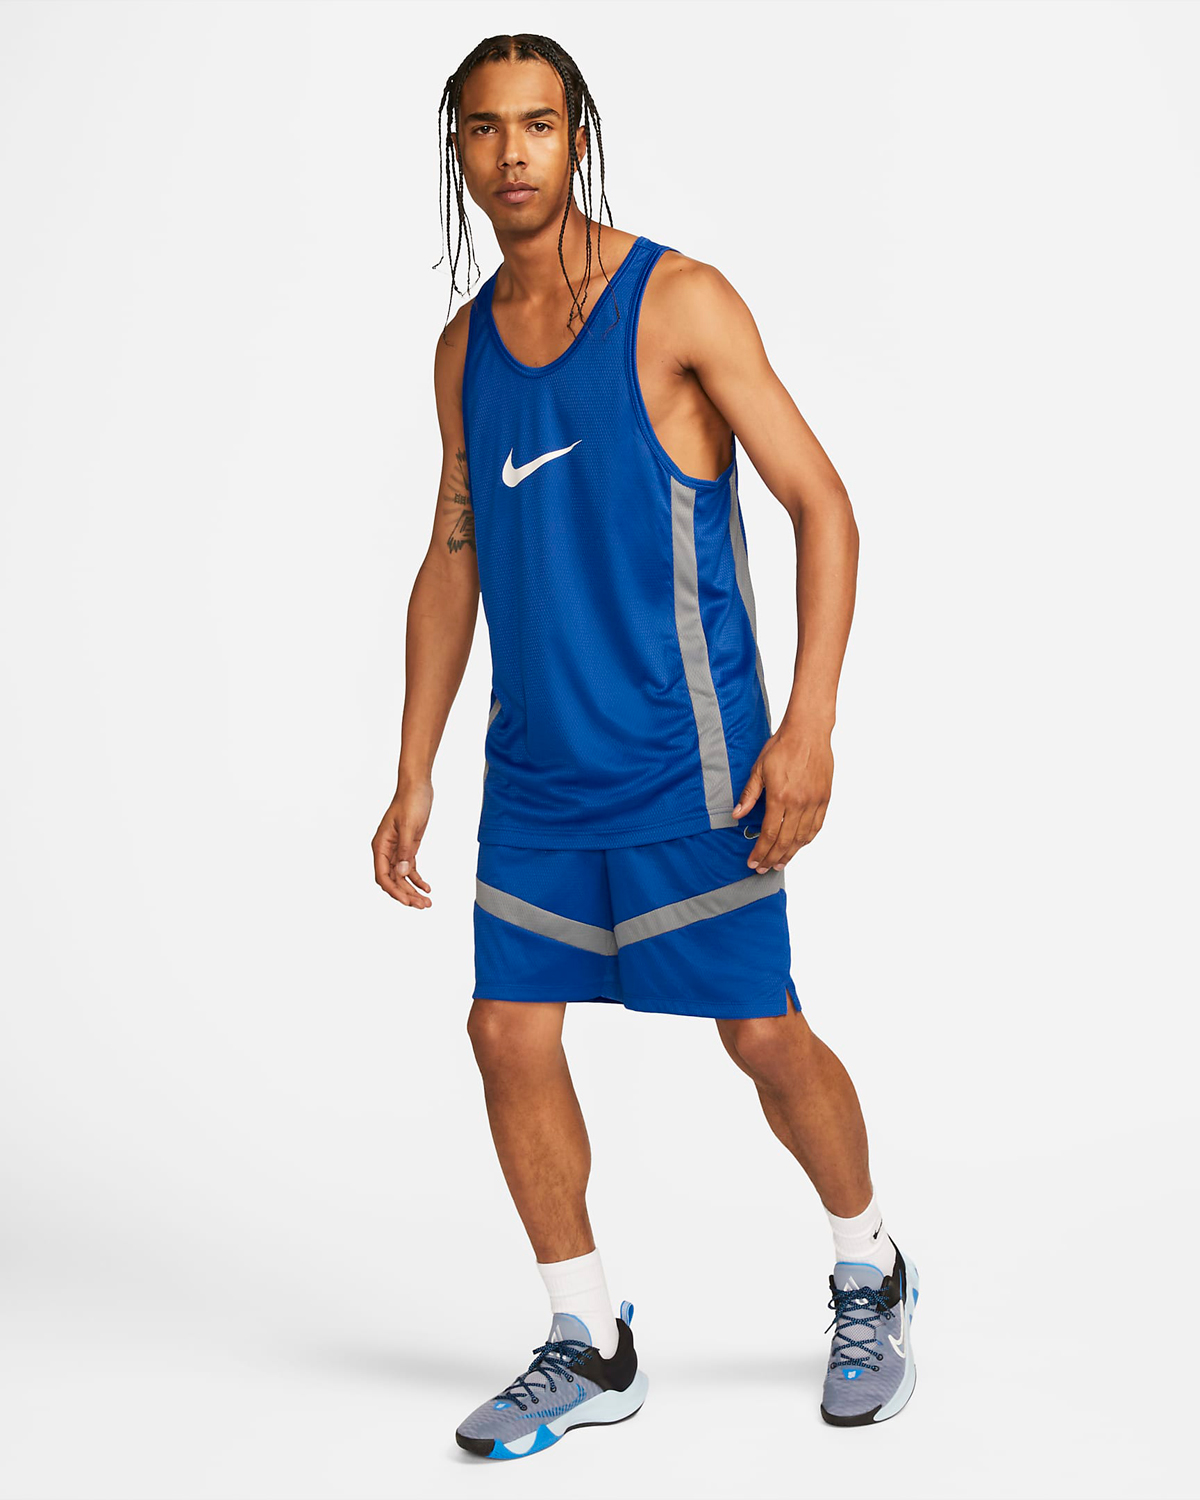 Nike-Icon-Basketball-Shorts-Game-Royal-Cool-Grey-Outfit